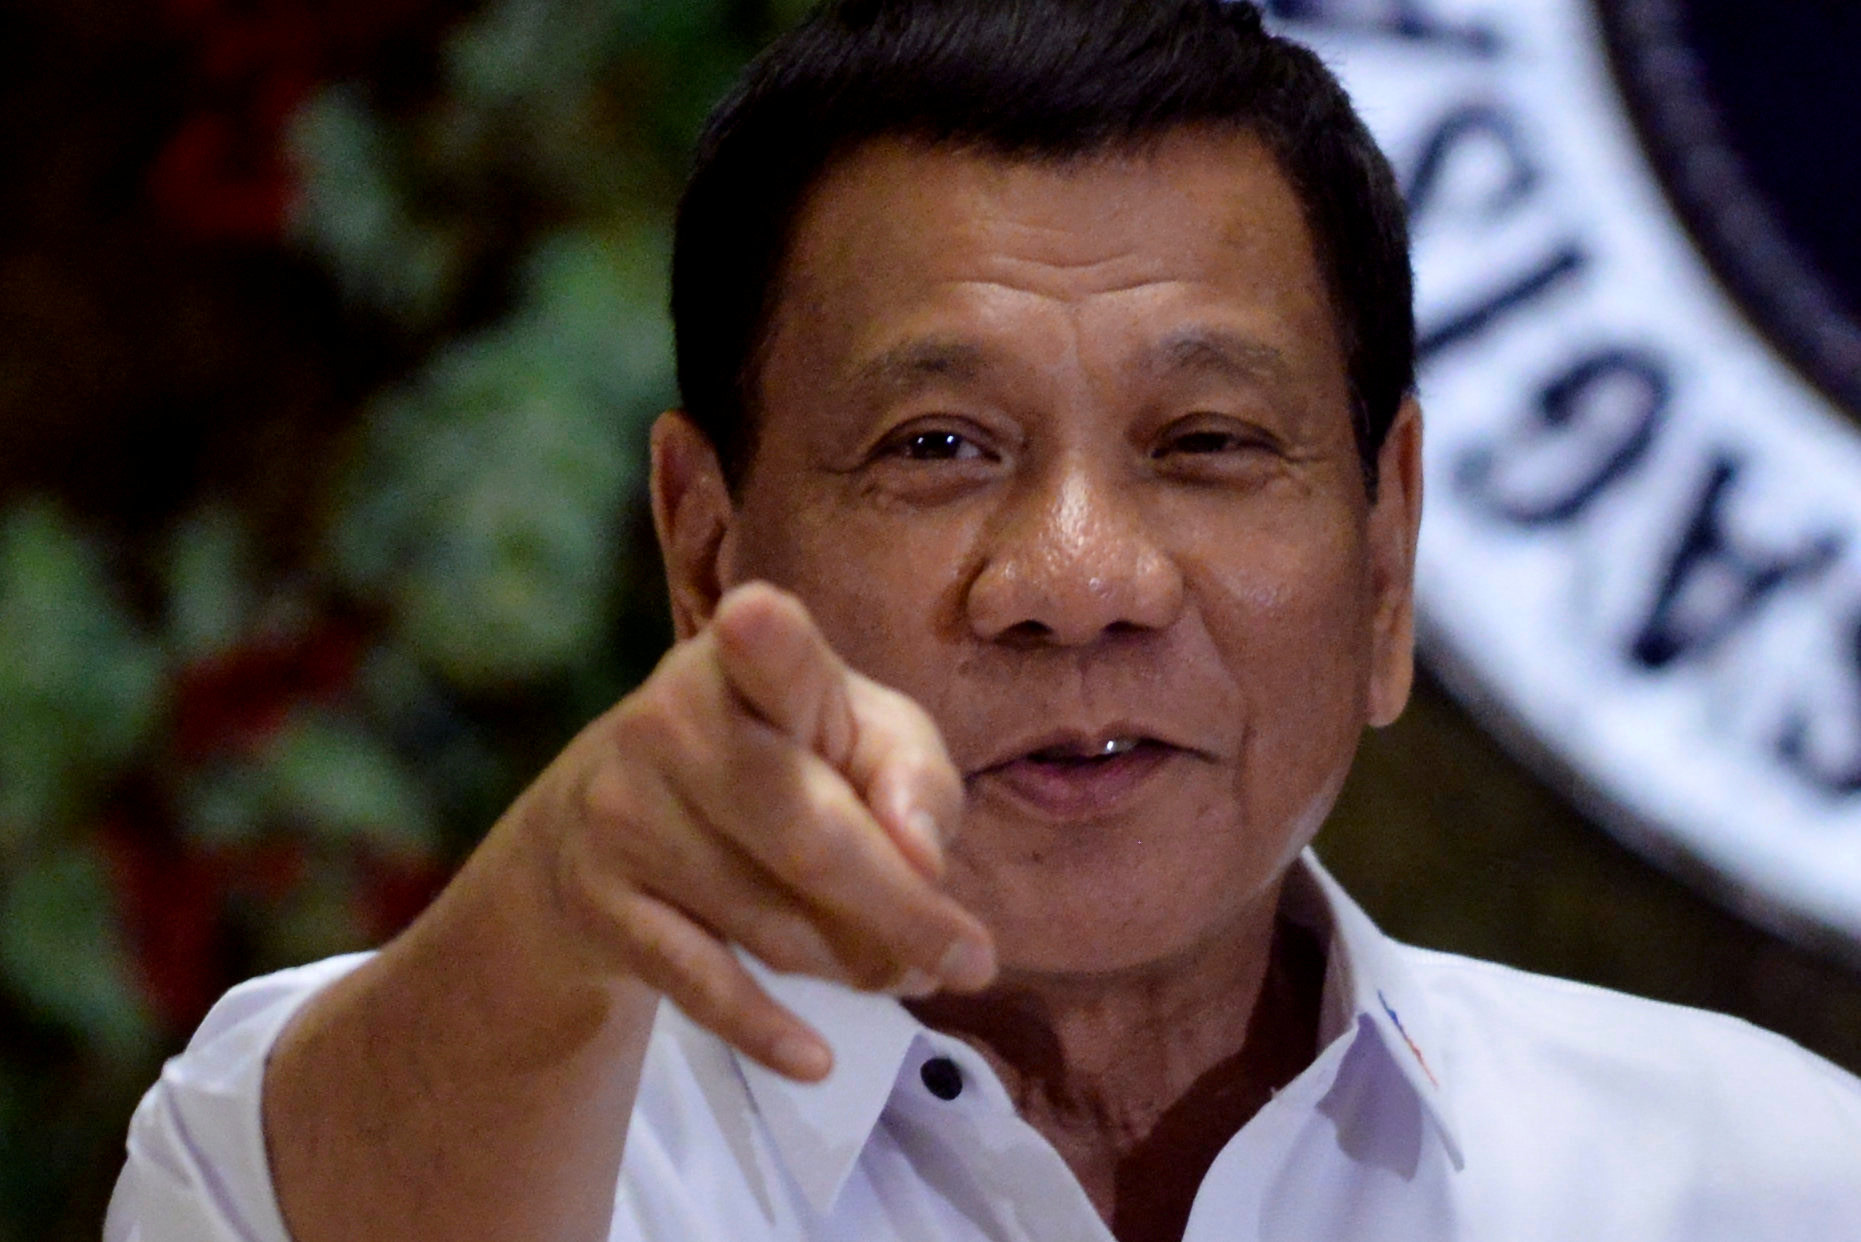 Duterte fires minister over corruption allegations